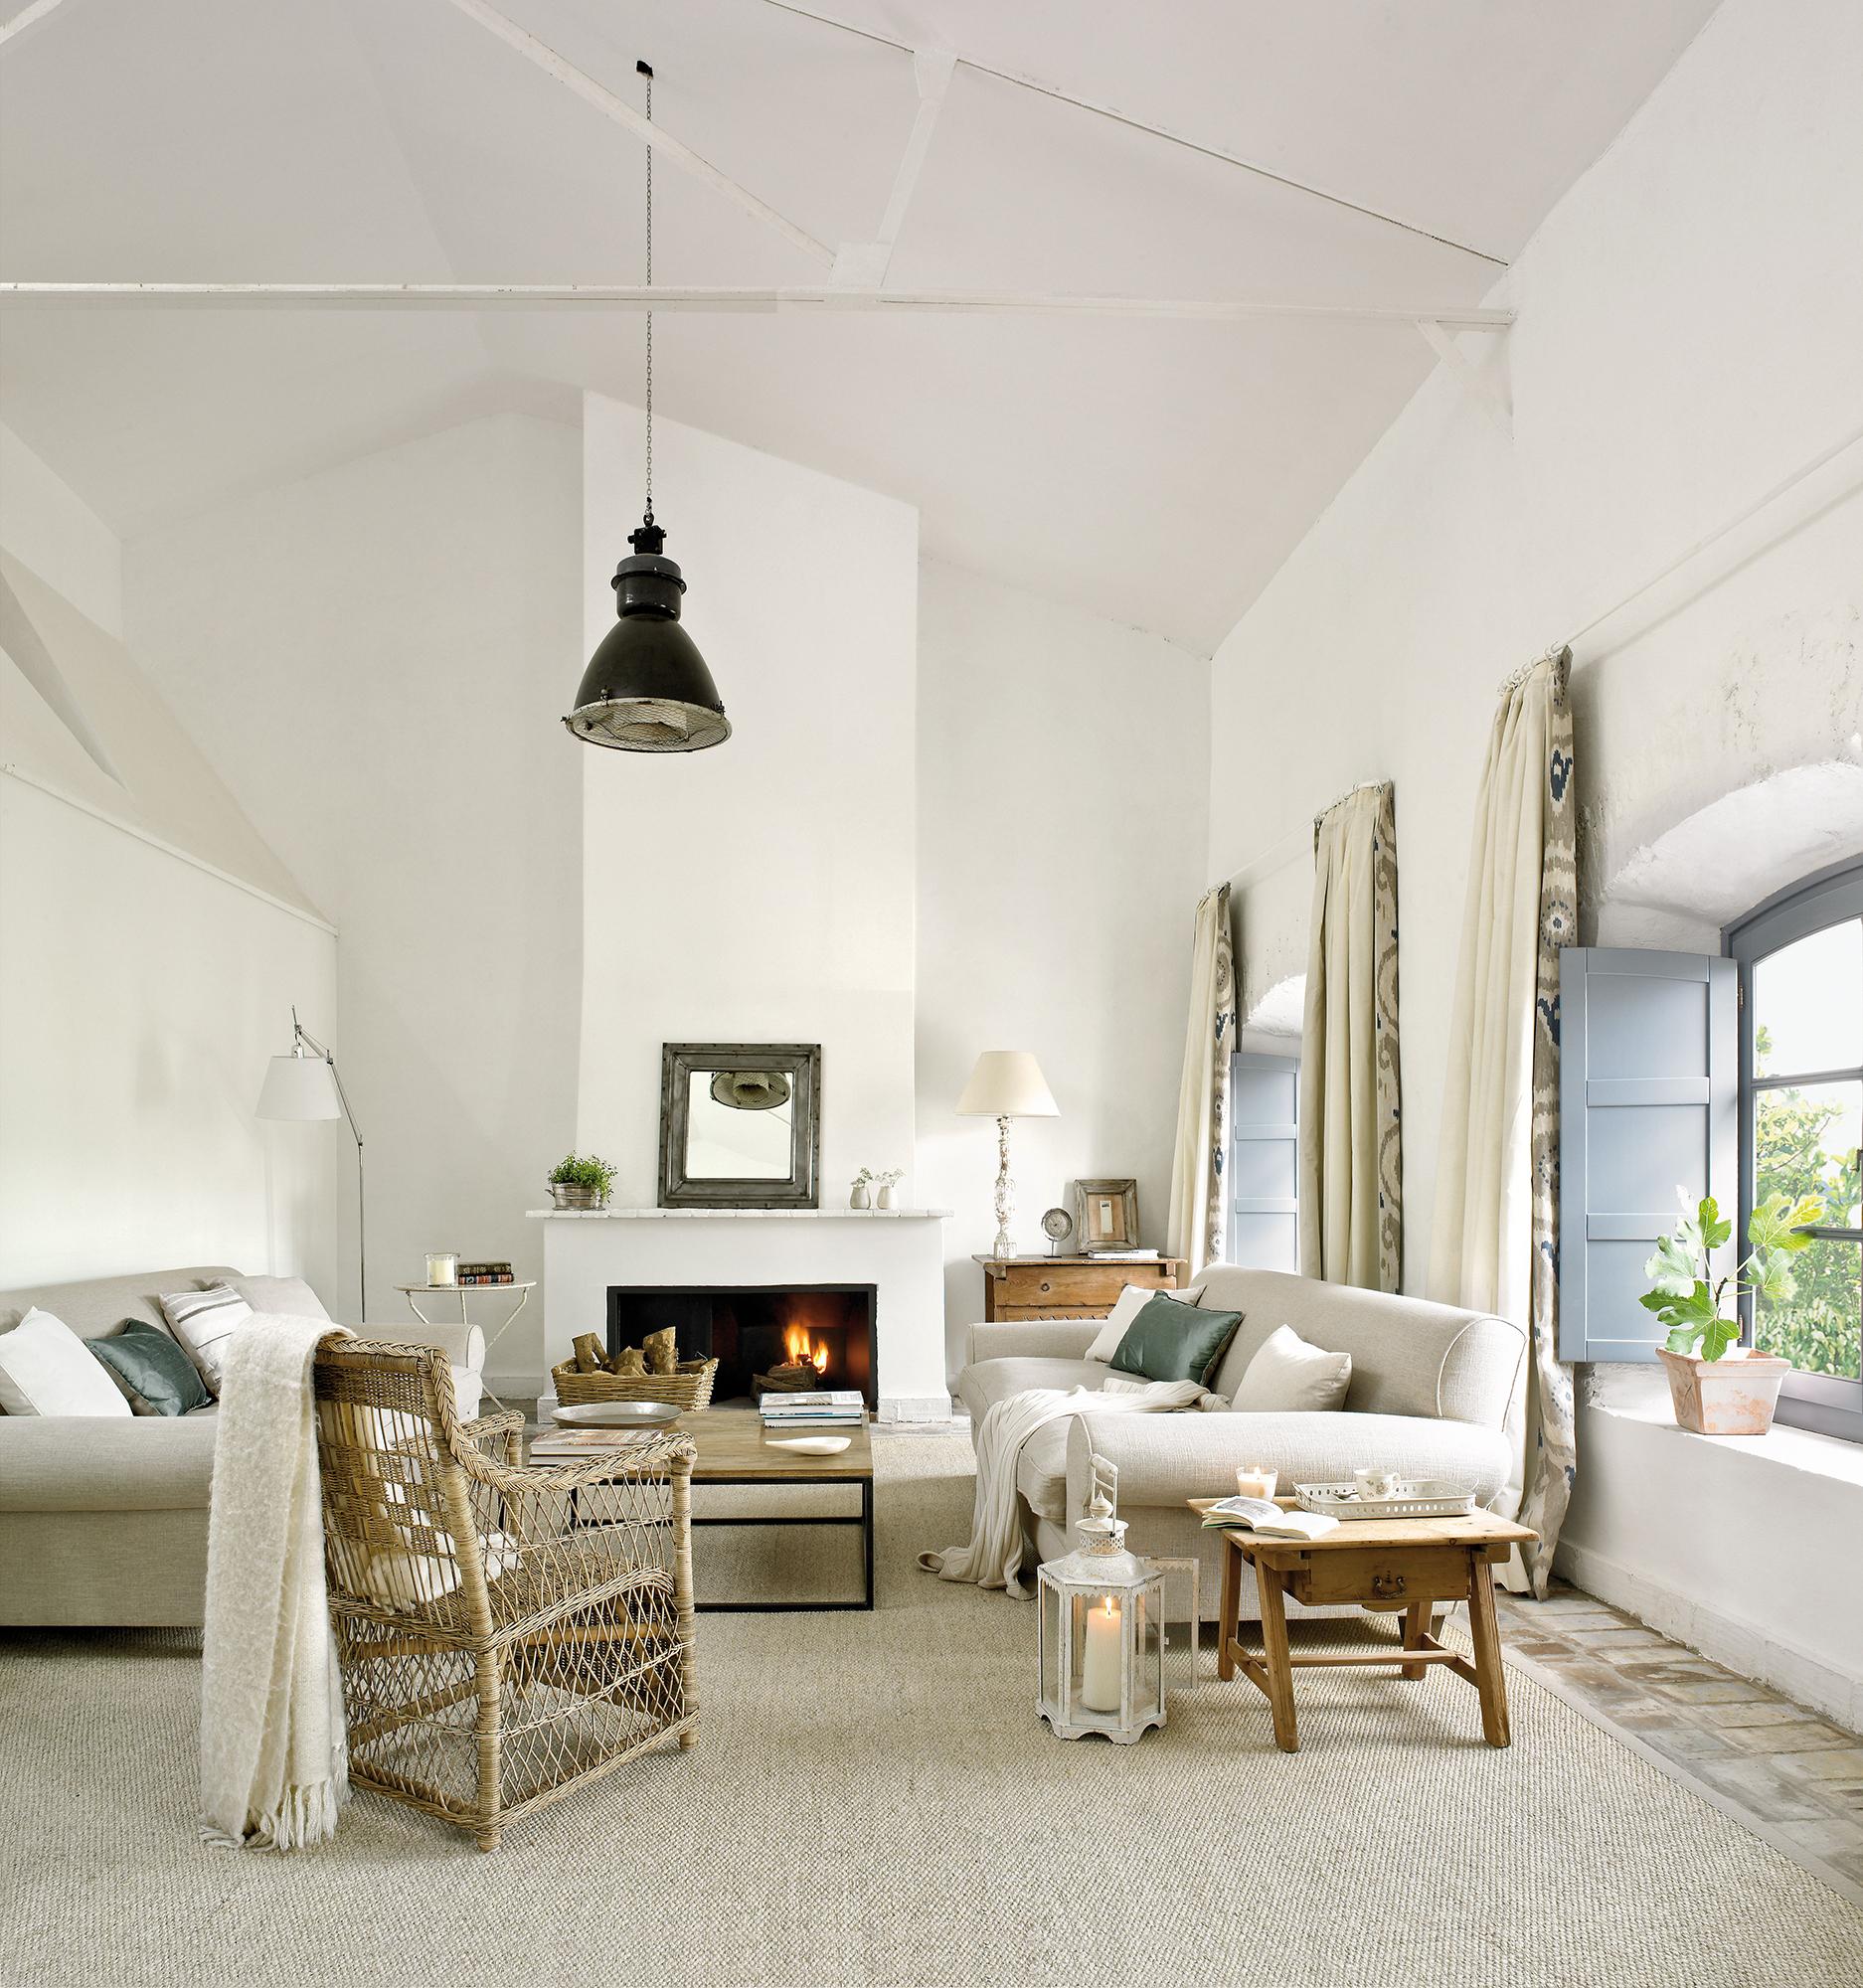 Salón blanco con alto techo abuhardillado, chimenea y butaca de fibra natural.